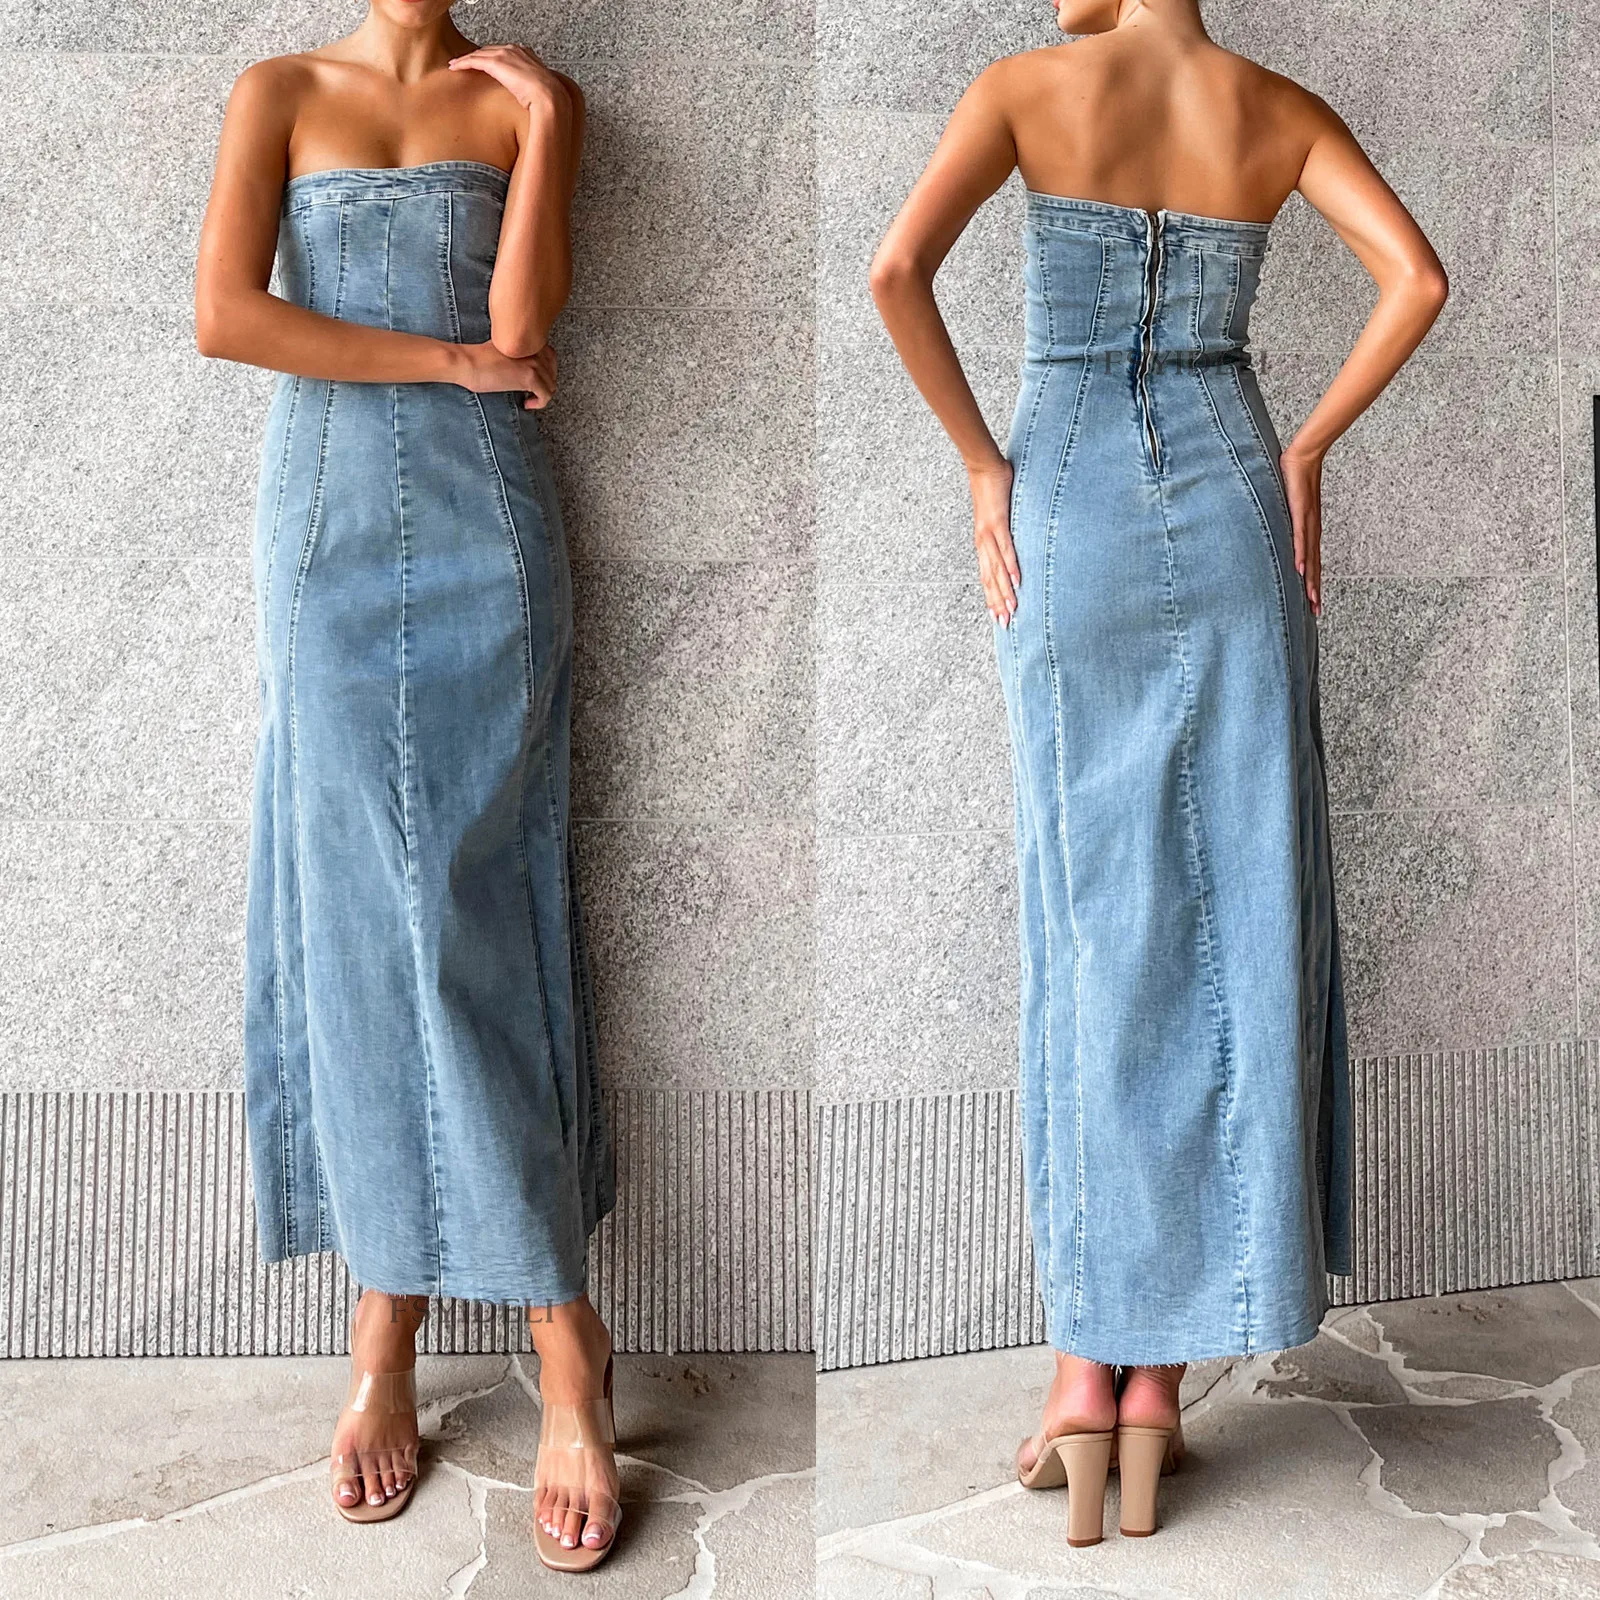 

Cowboy Strapless Dress for Women Summer Sexy Tight Fitting Slit Long Skirt